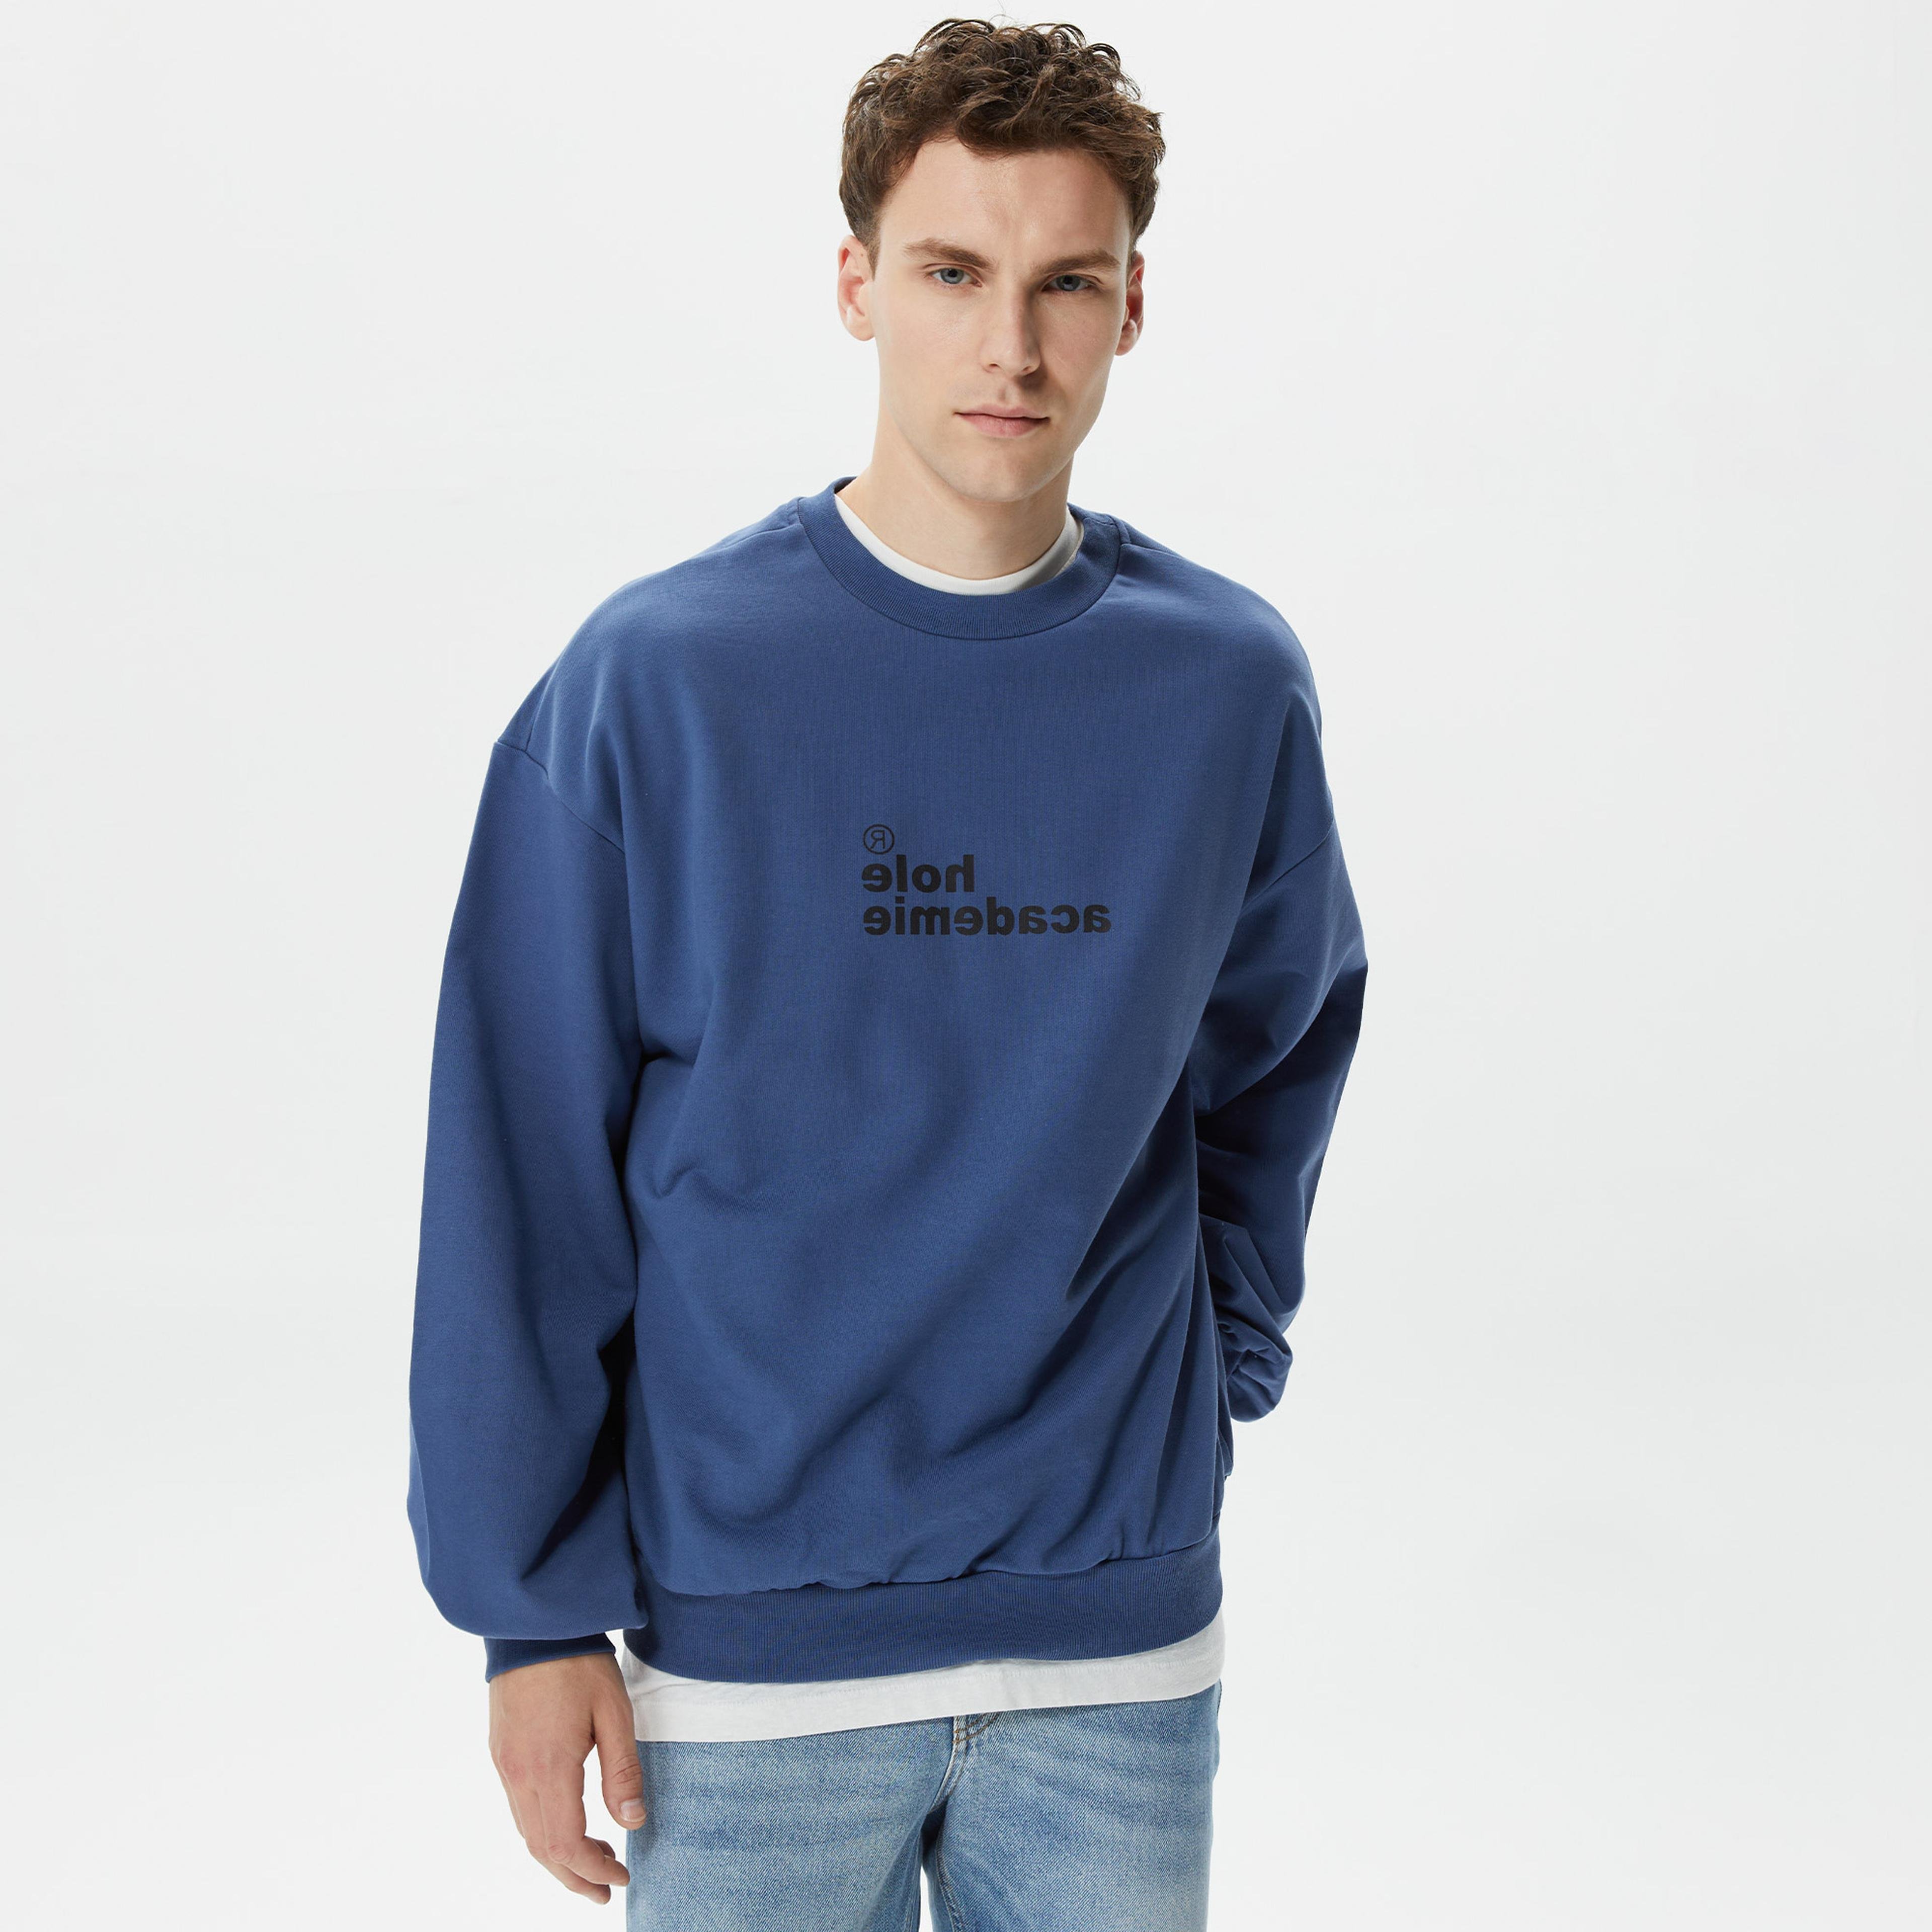 Holeacademie Essentials Erkek Lacivert Sweatshirt